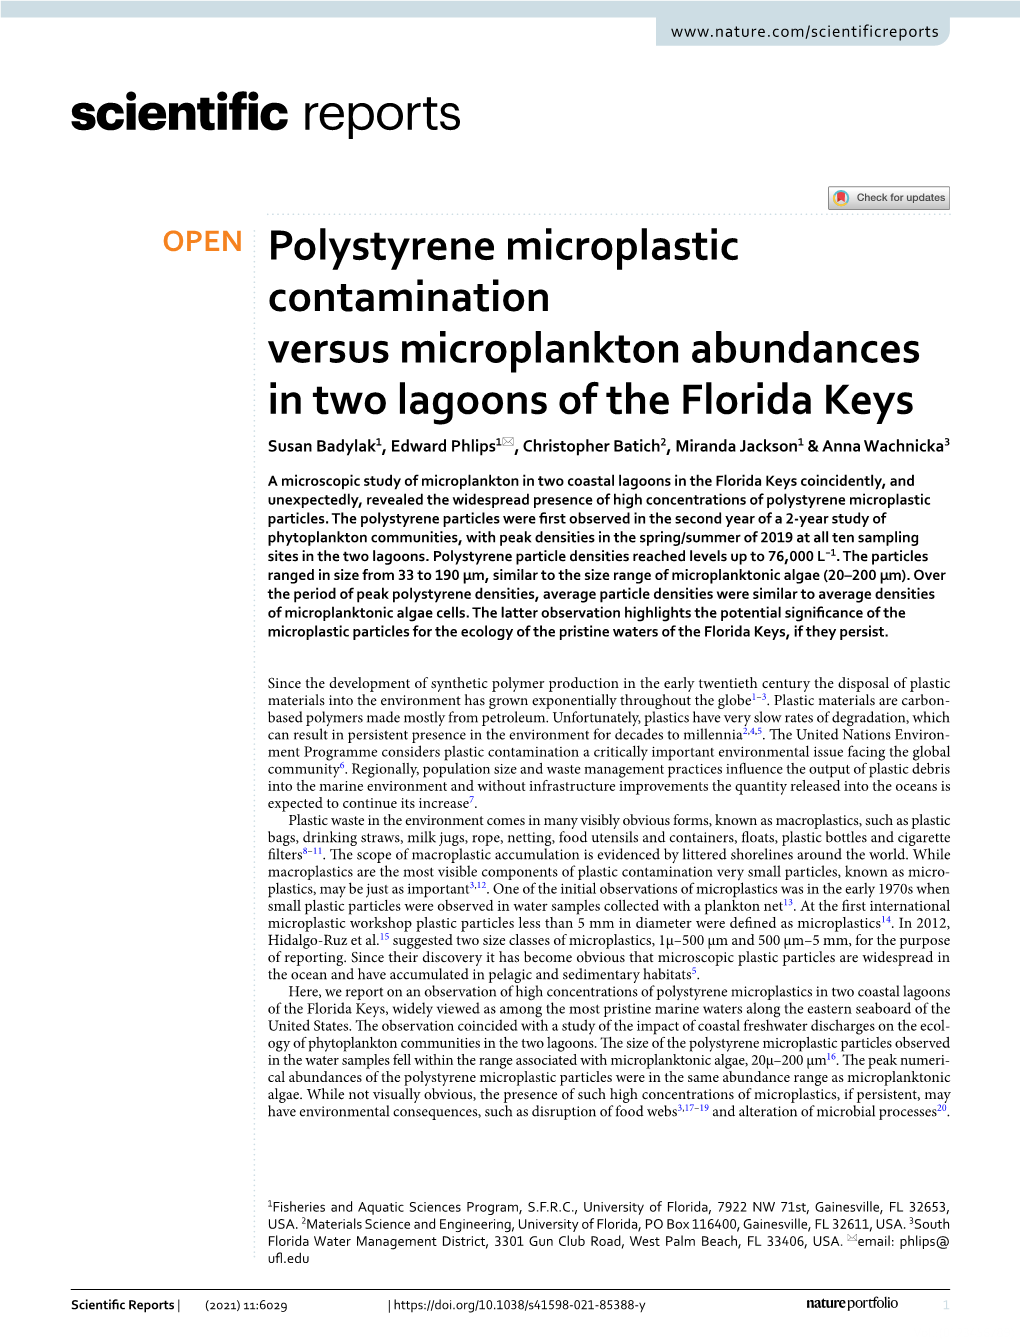 Polystyrene Microplastic Contamination Versus Microplankton Abundances in Two Lagoons of the Florida Keys